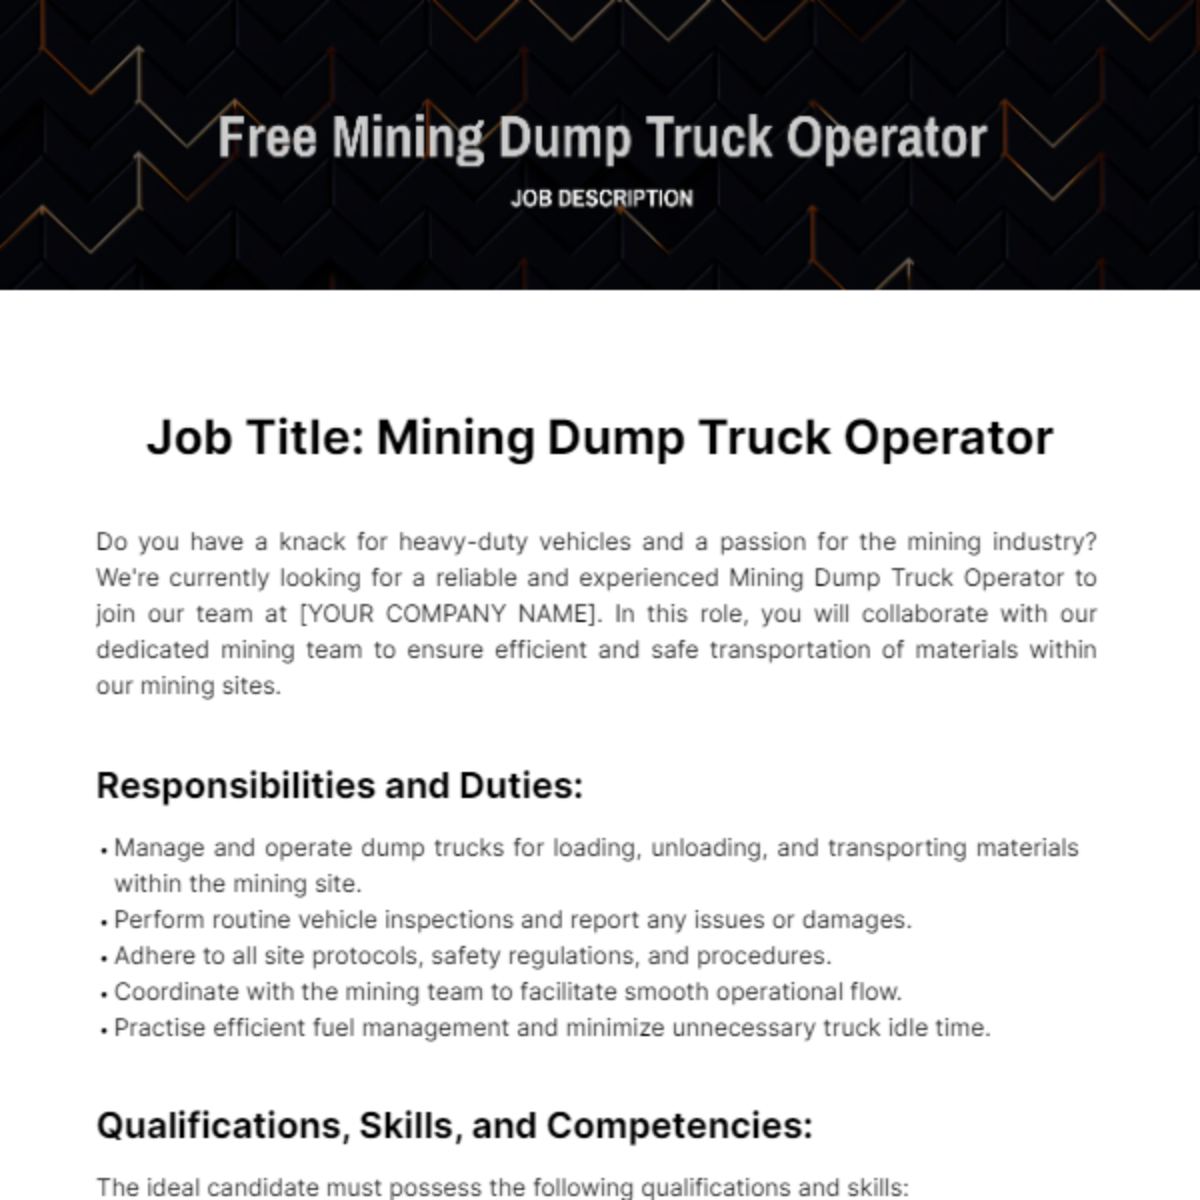 Mining Dump Truck Operator job Description Template